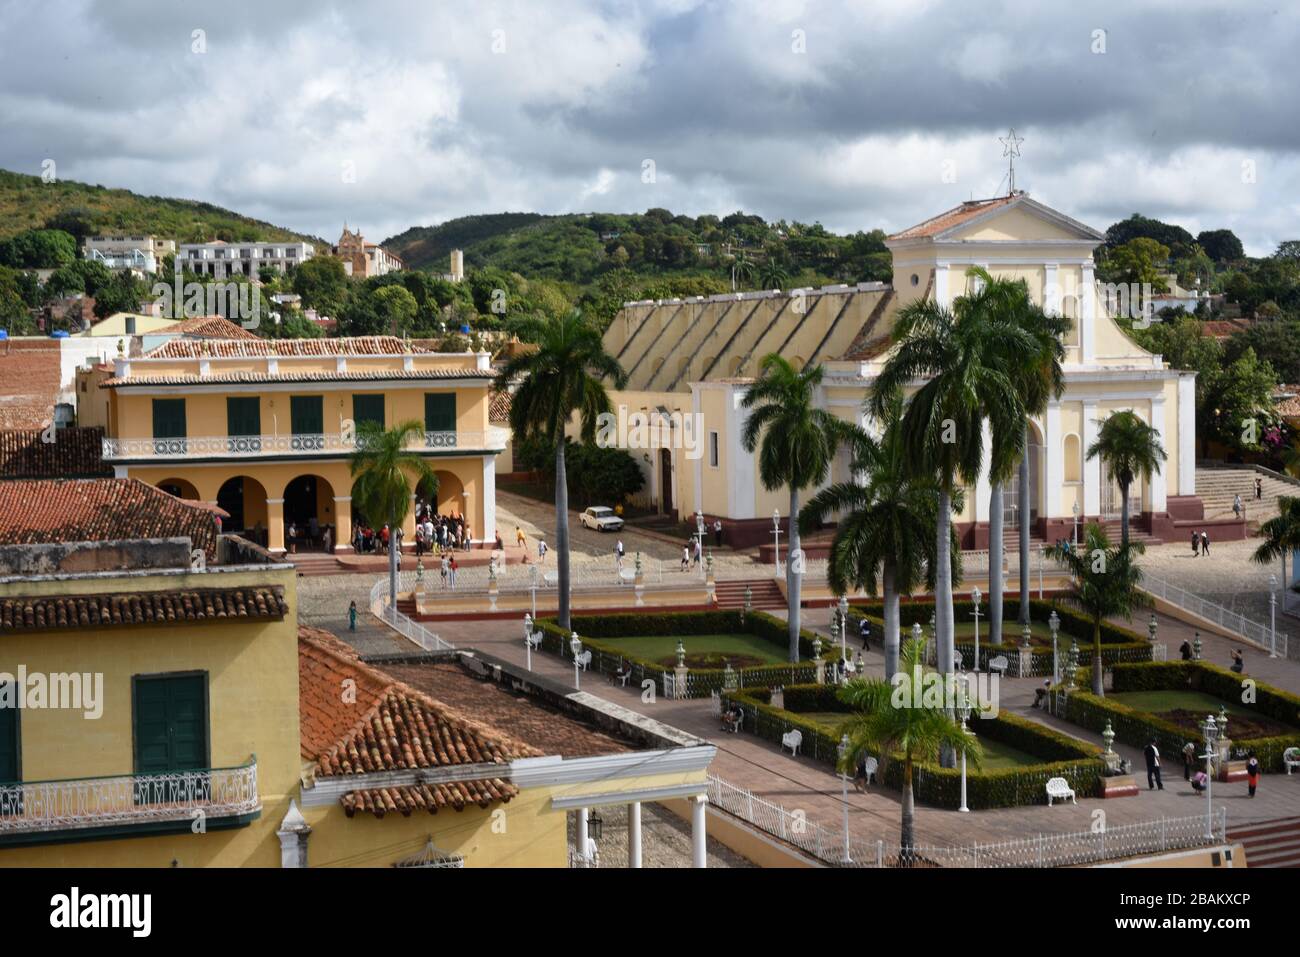 Plaza, iglesia, 2014, Cuba Foto de stock